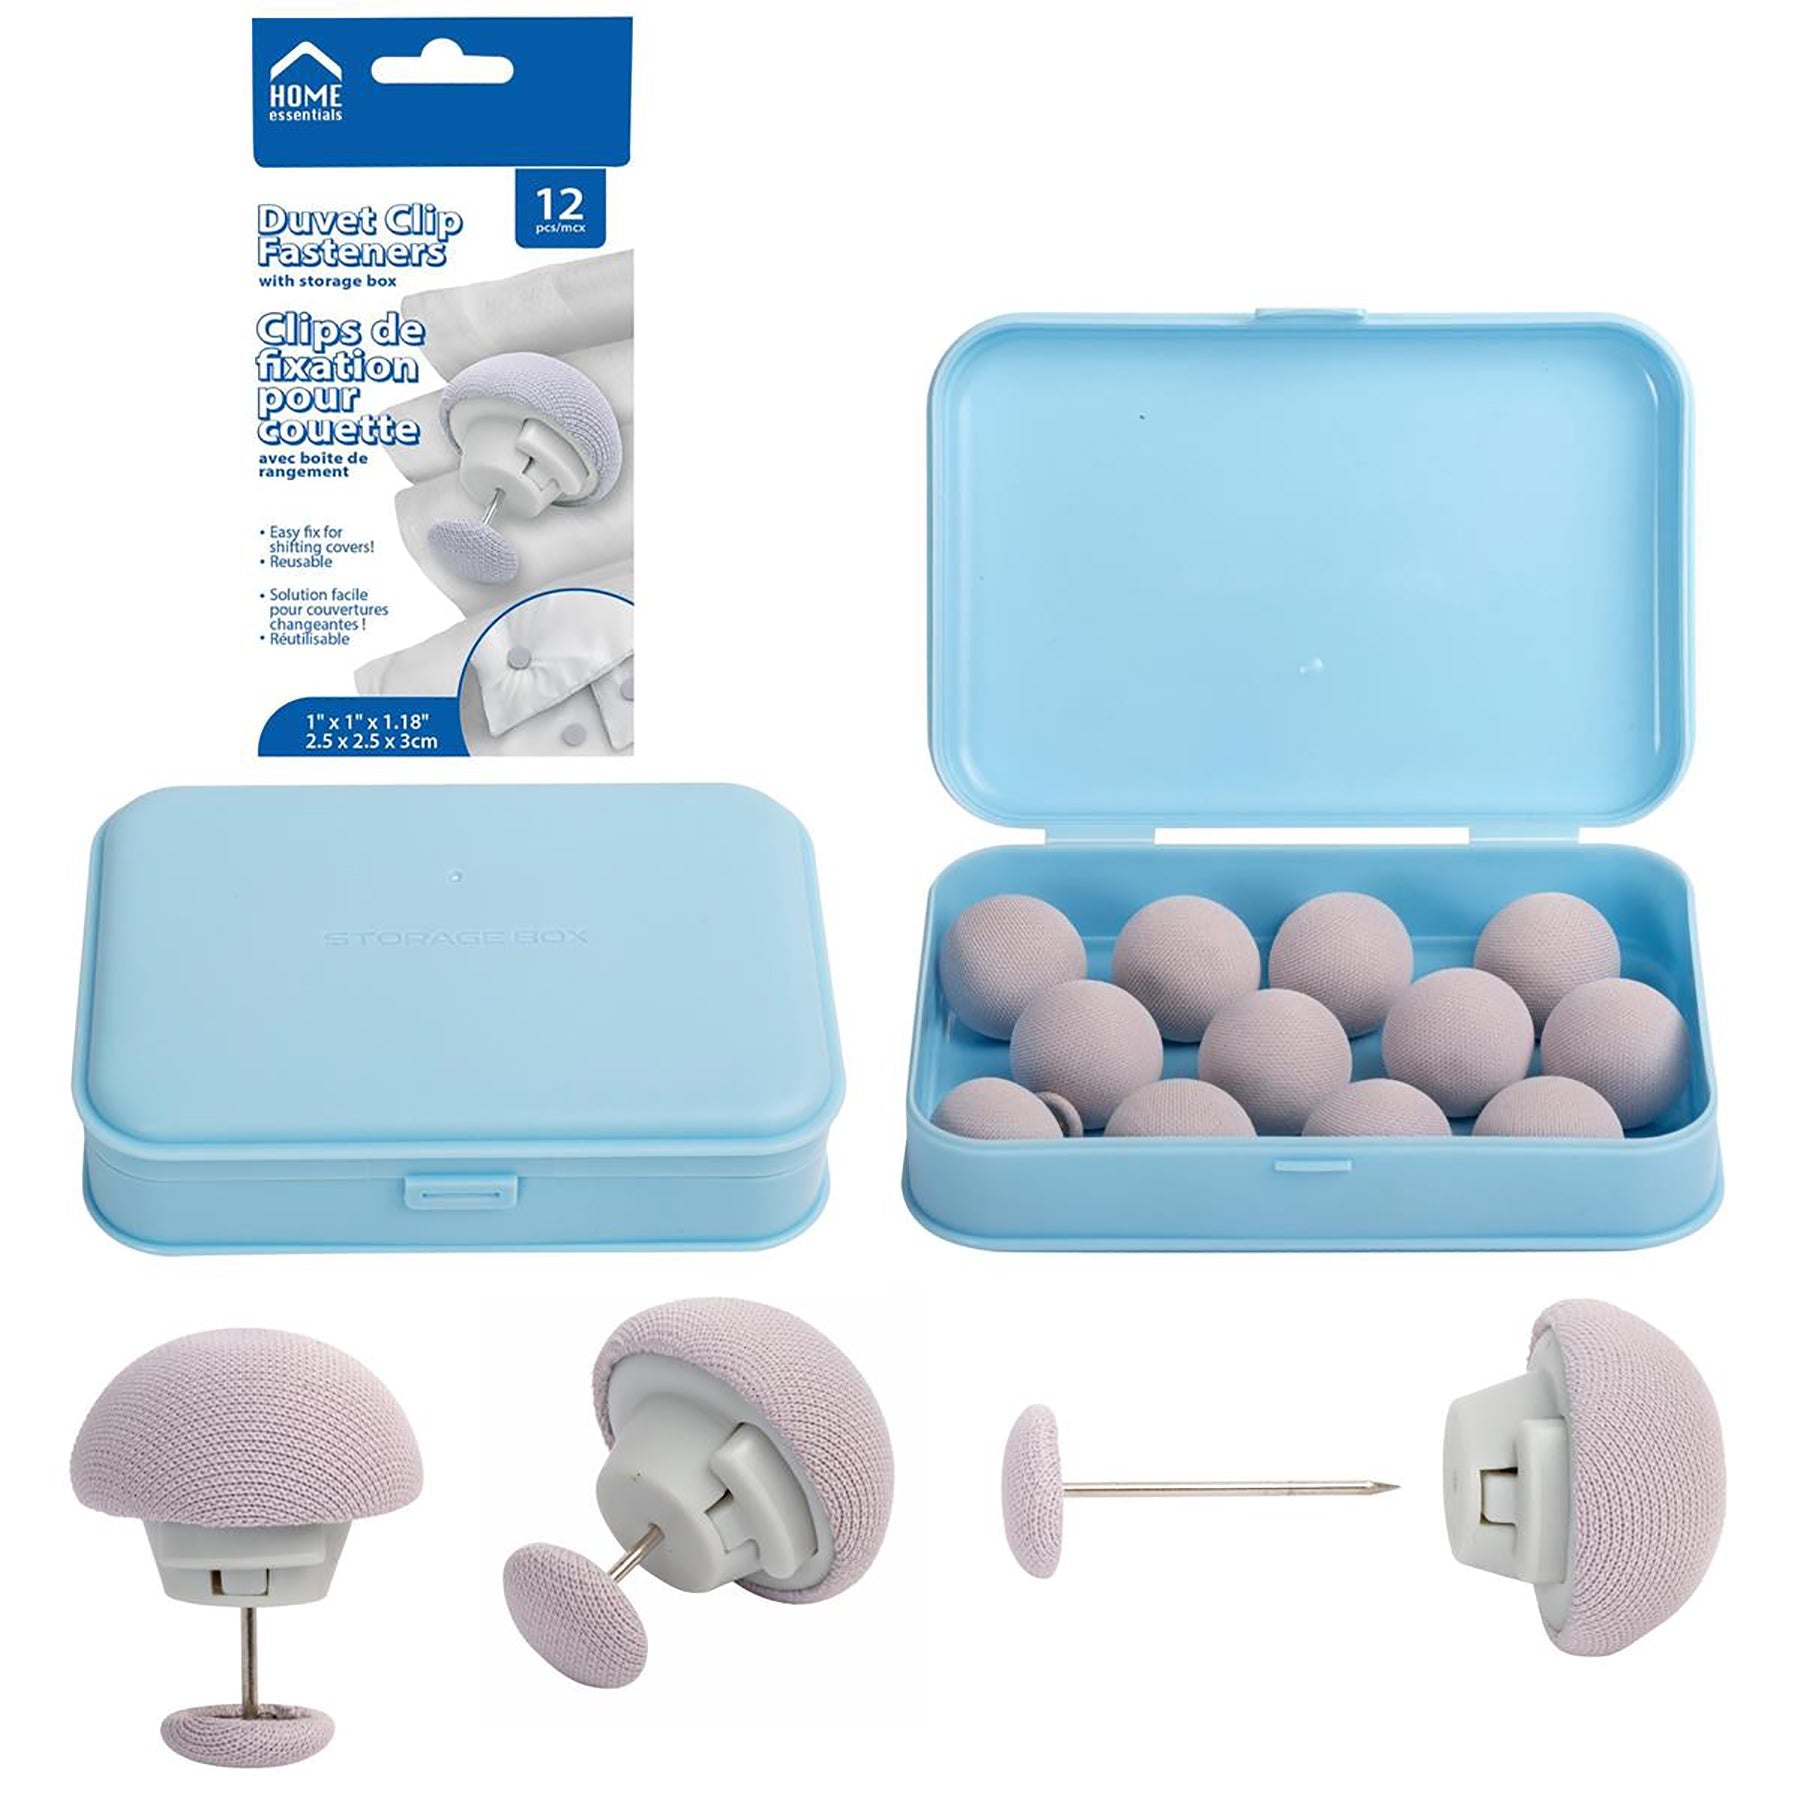 Home Essentials 12 Duvet Clip Fasteners with Plastic Box 1x1x1.18in